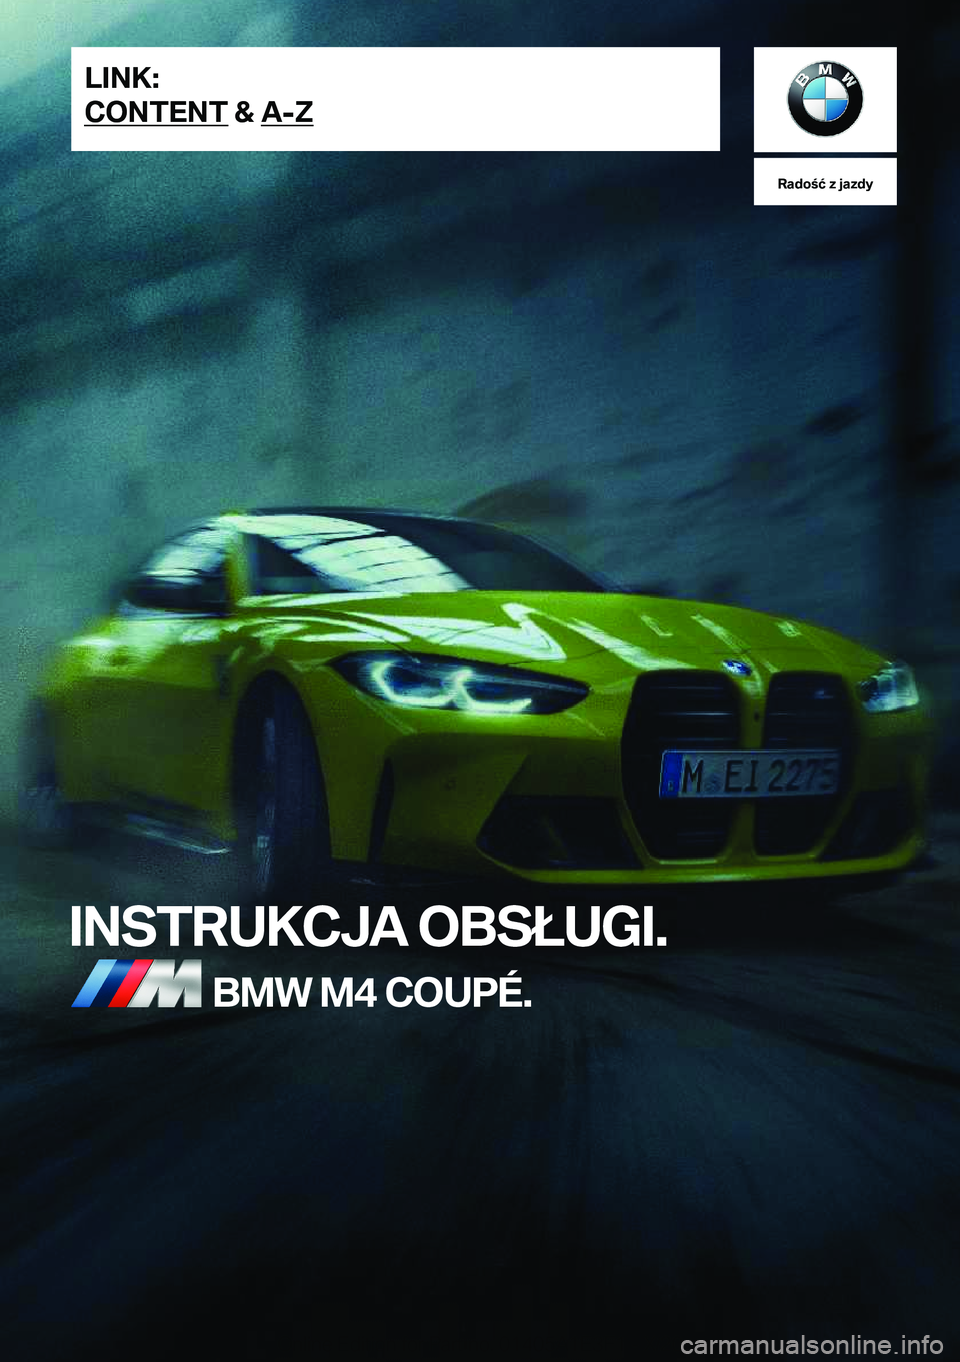 BMW M4 2021  Instrukcja obsługi (in Polish) �R�a�d�o�ć��z��j�a�z�d�y
�I�N�S�T�R�U�K�C�J�A��O�B�S�Ł�U�G�I�.�B�M�W��M�4��C�O�U�P�